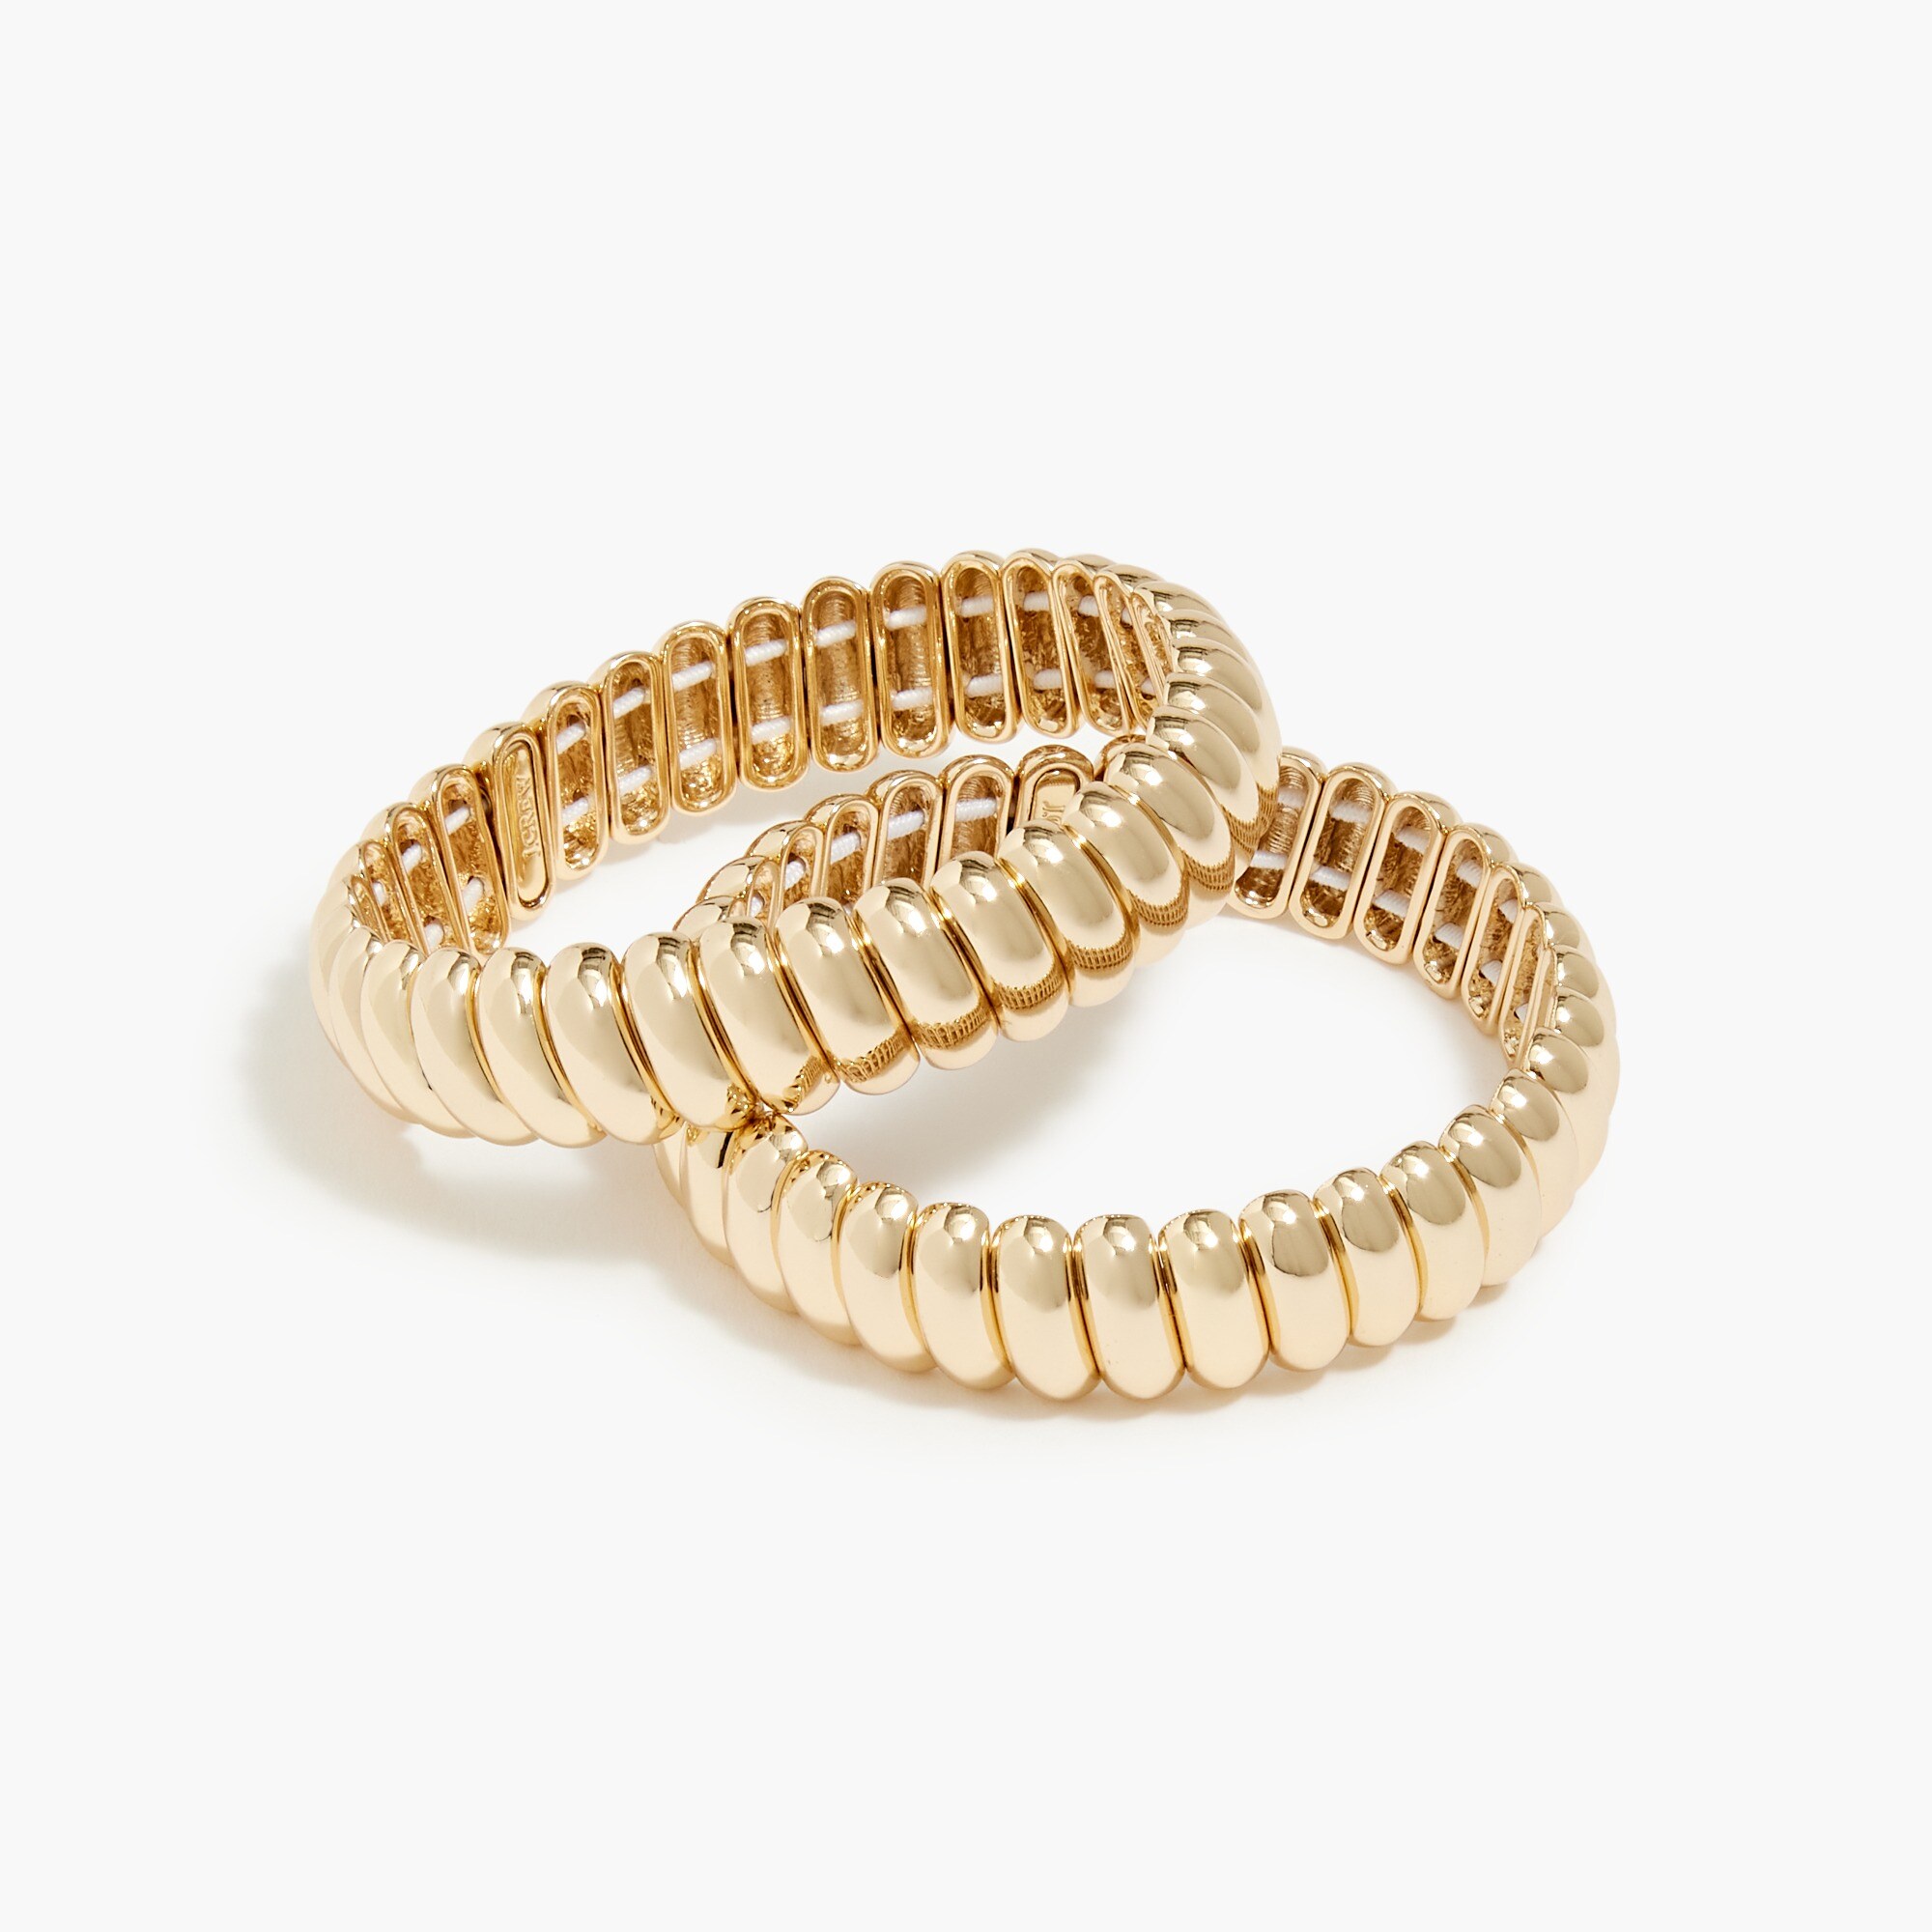  Metal-bead stretch bracelets set